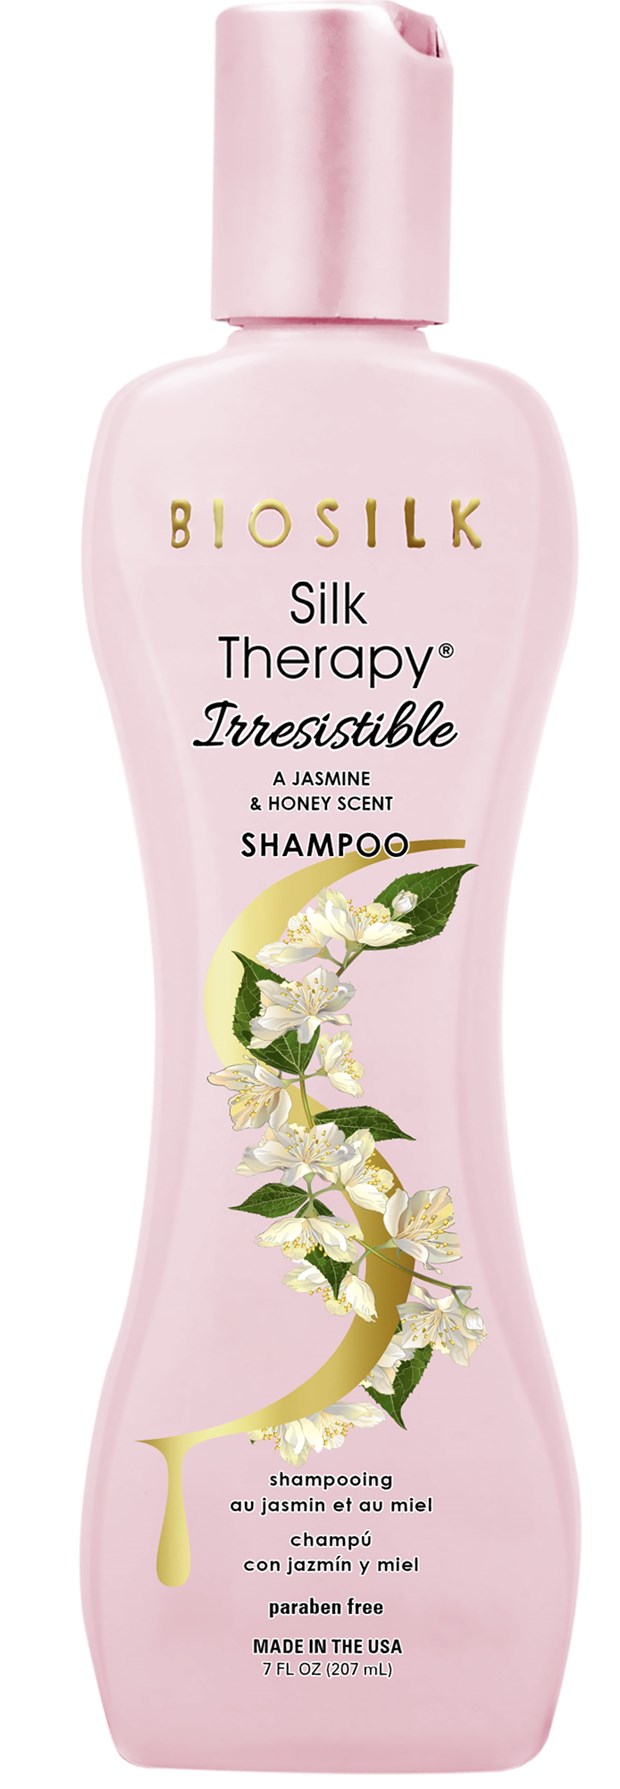 Silk Therapy Irresistible Shampoo